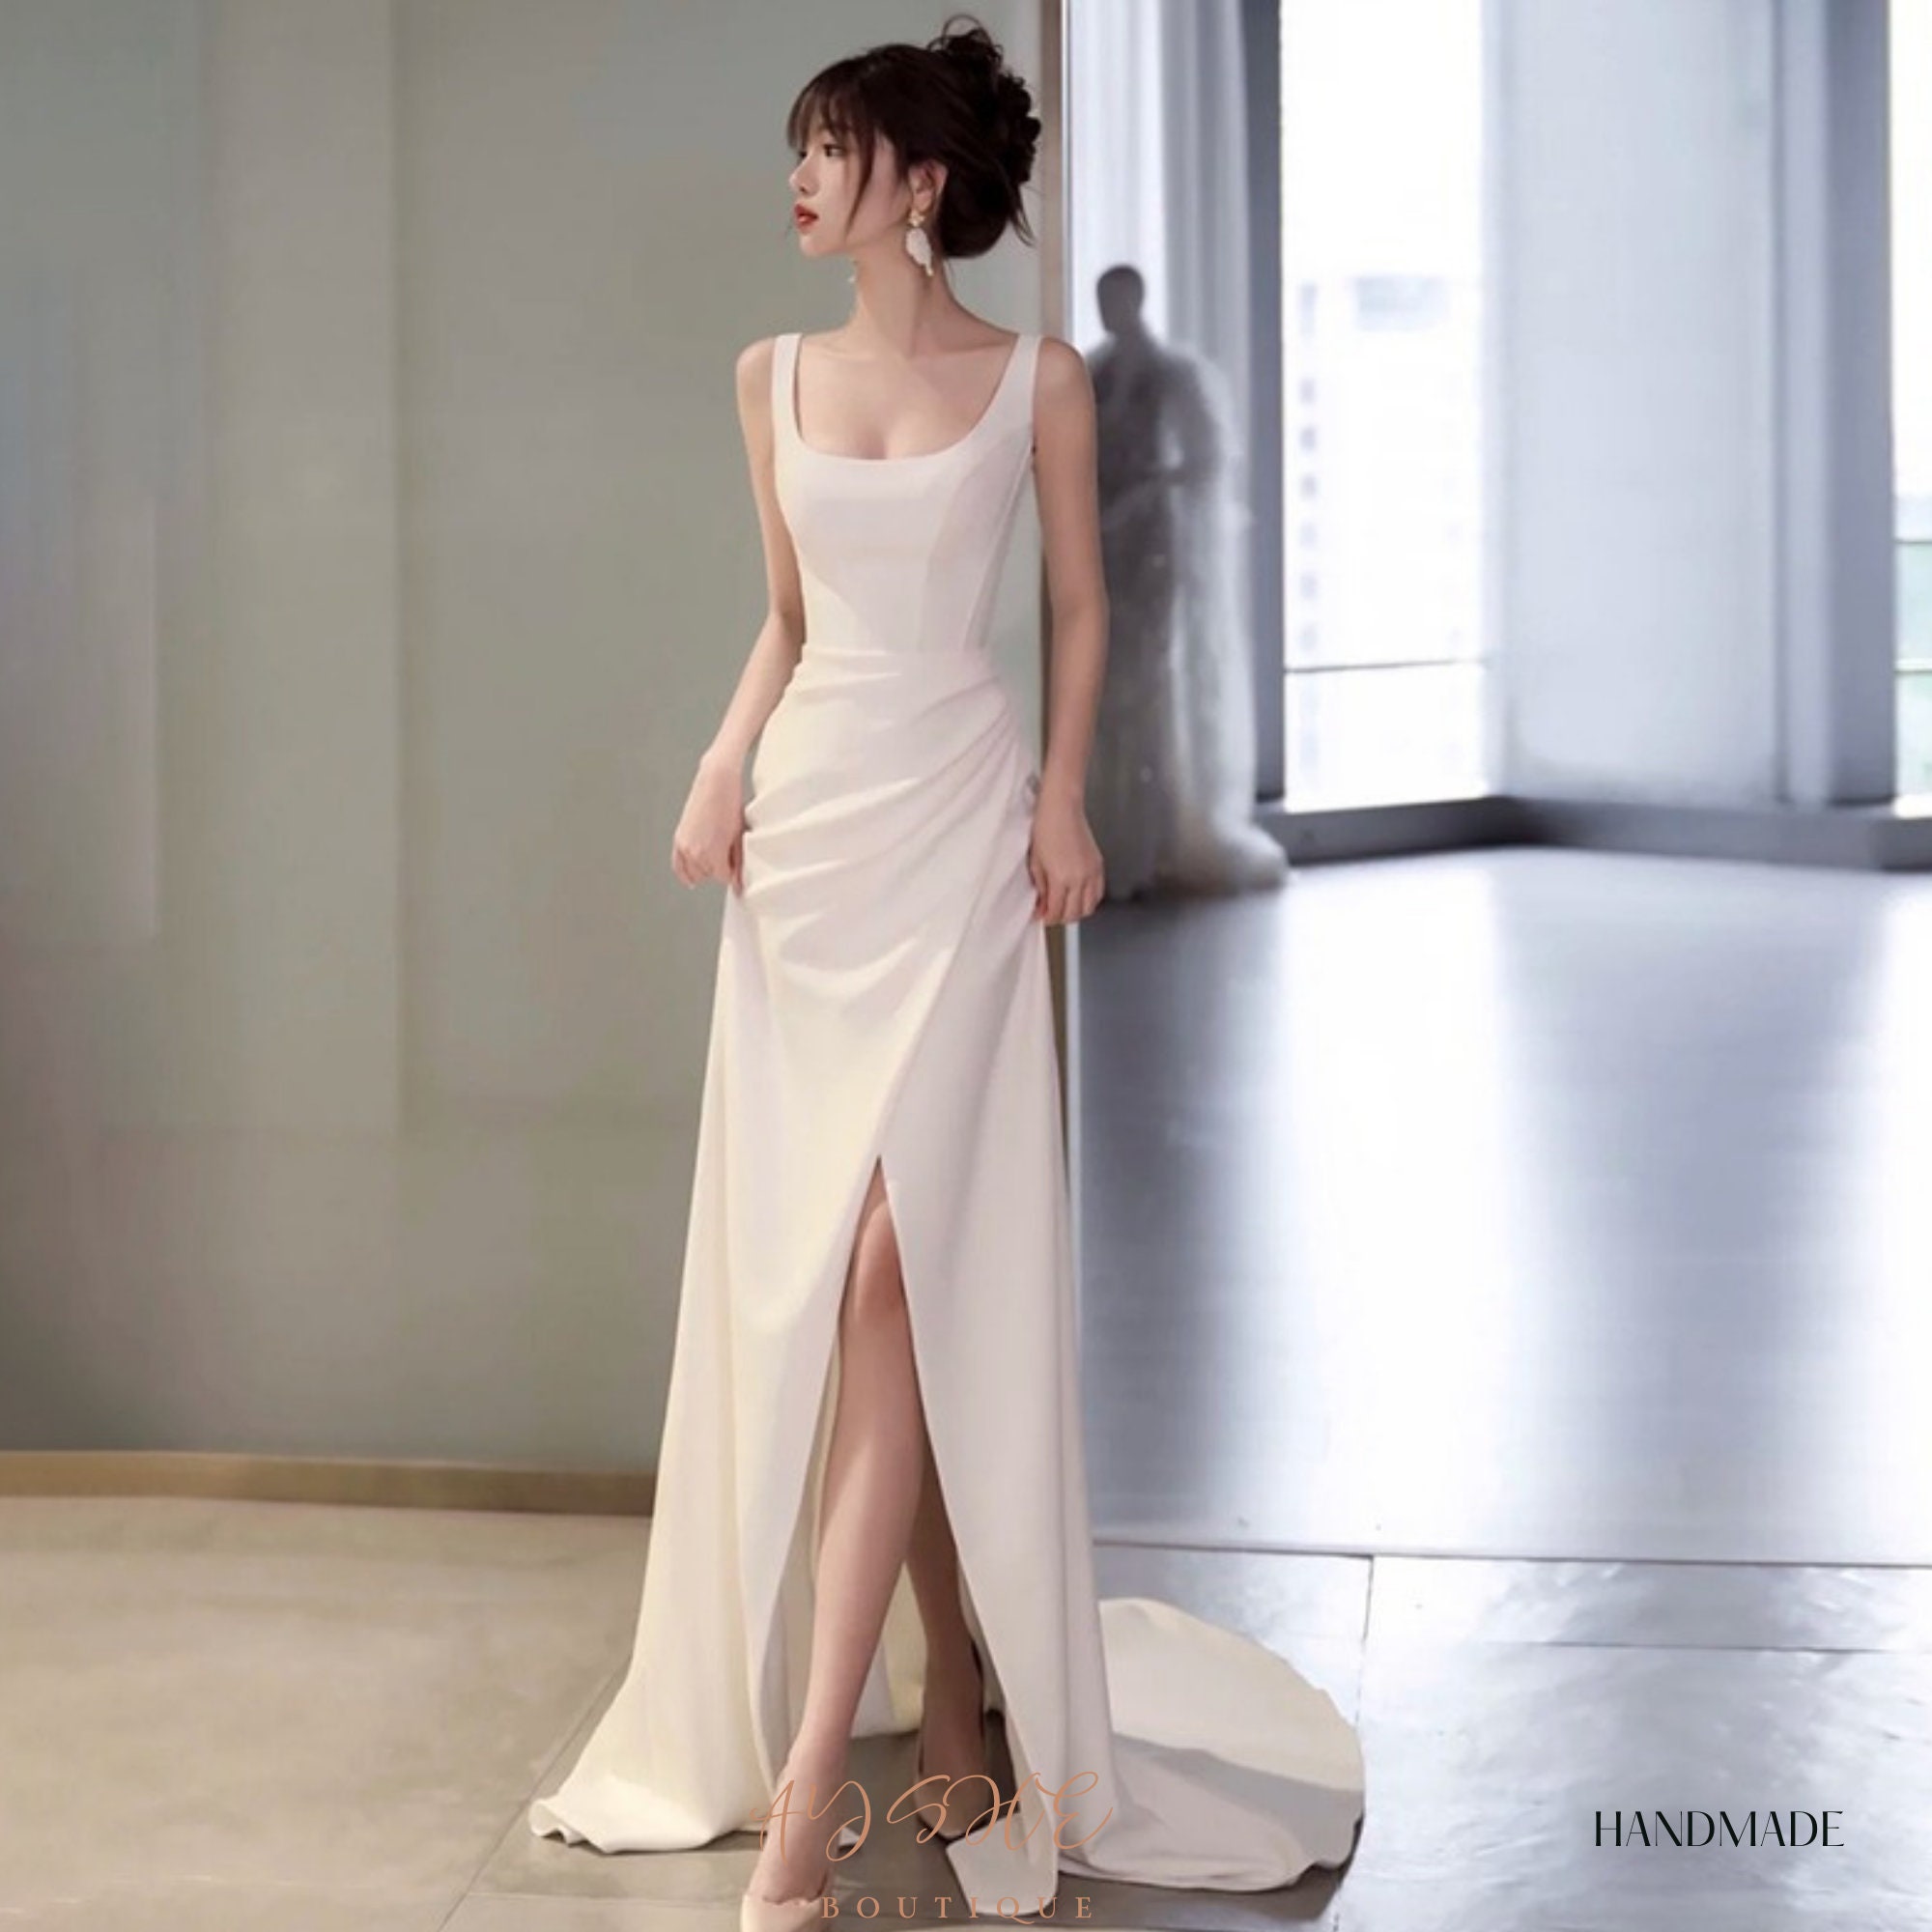 Ivory Tulle Lace Long Sleeve Beach Wedding Dresses MW716